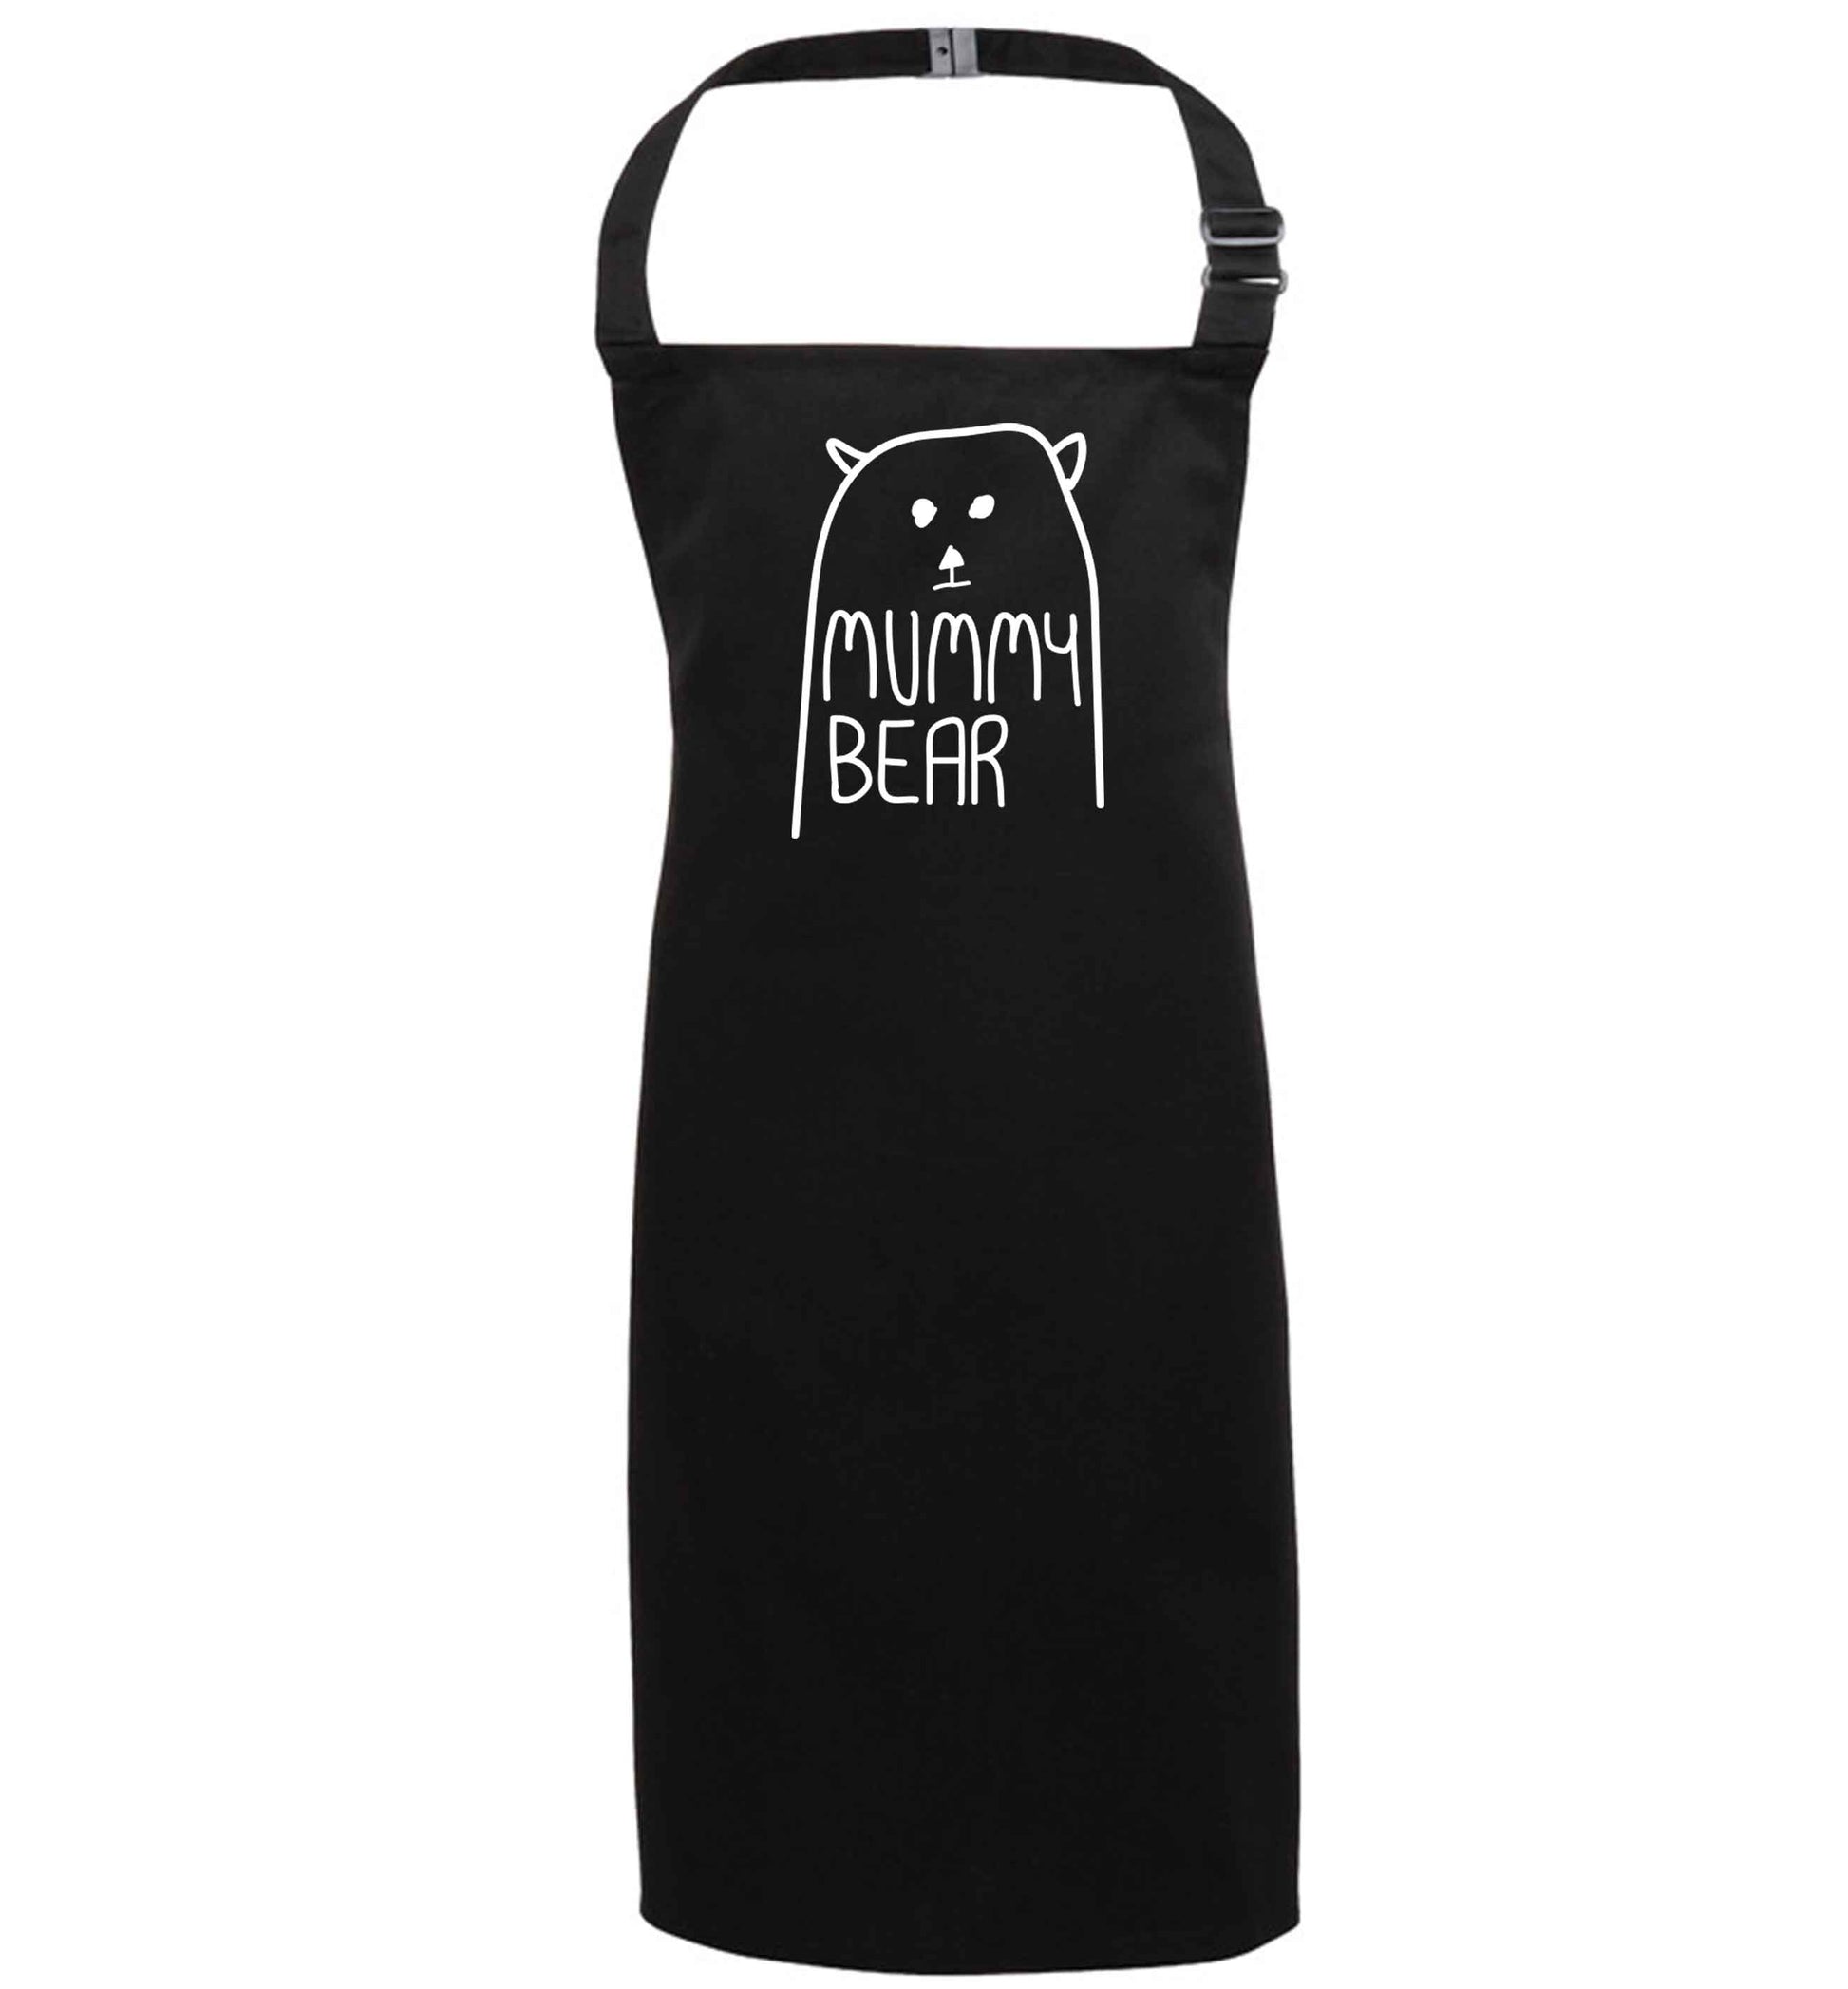 Mummy bear black apron 7-10 years